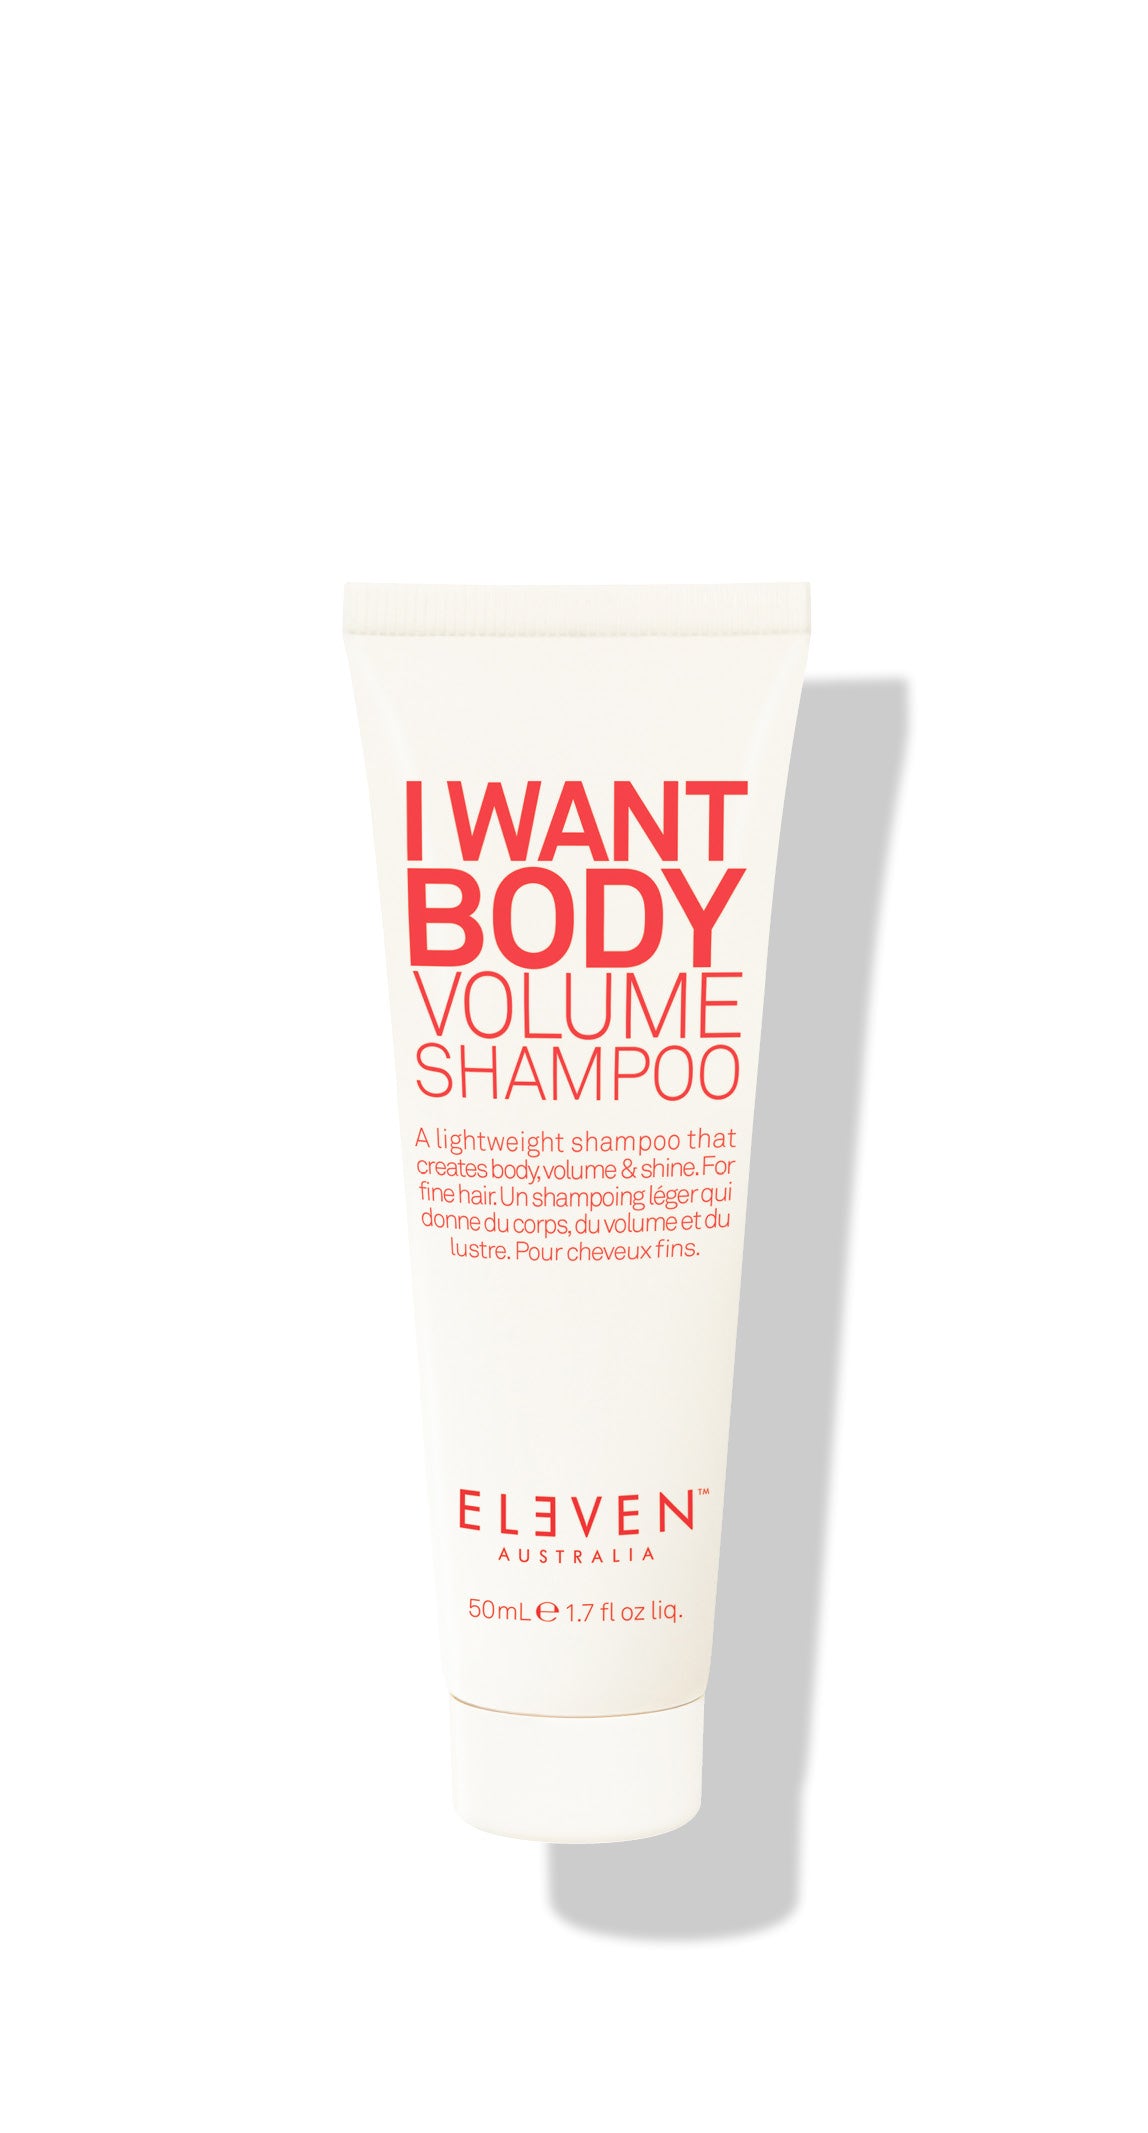 ELEVEN Hair I WANT BODY VOLUME SHAMPOO ELEVEN Shampoo